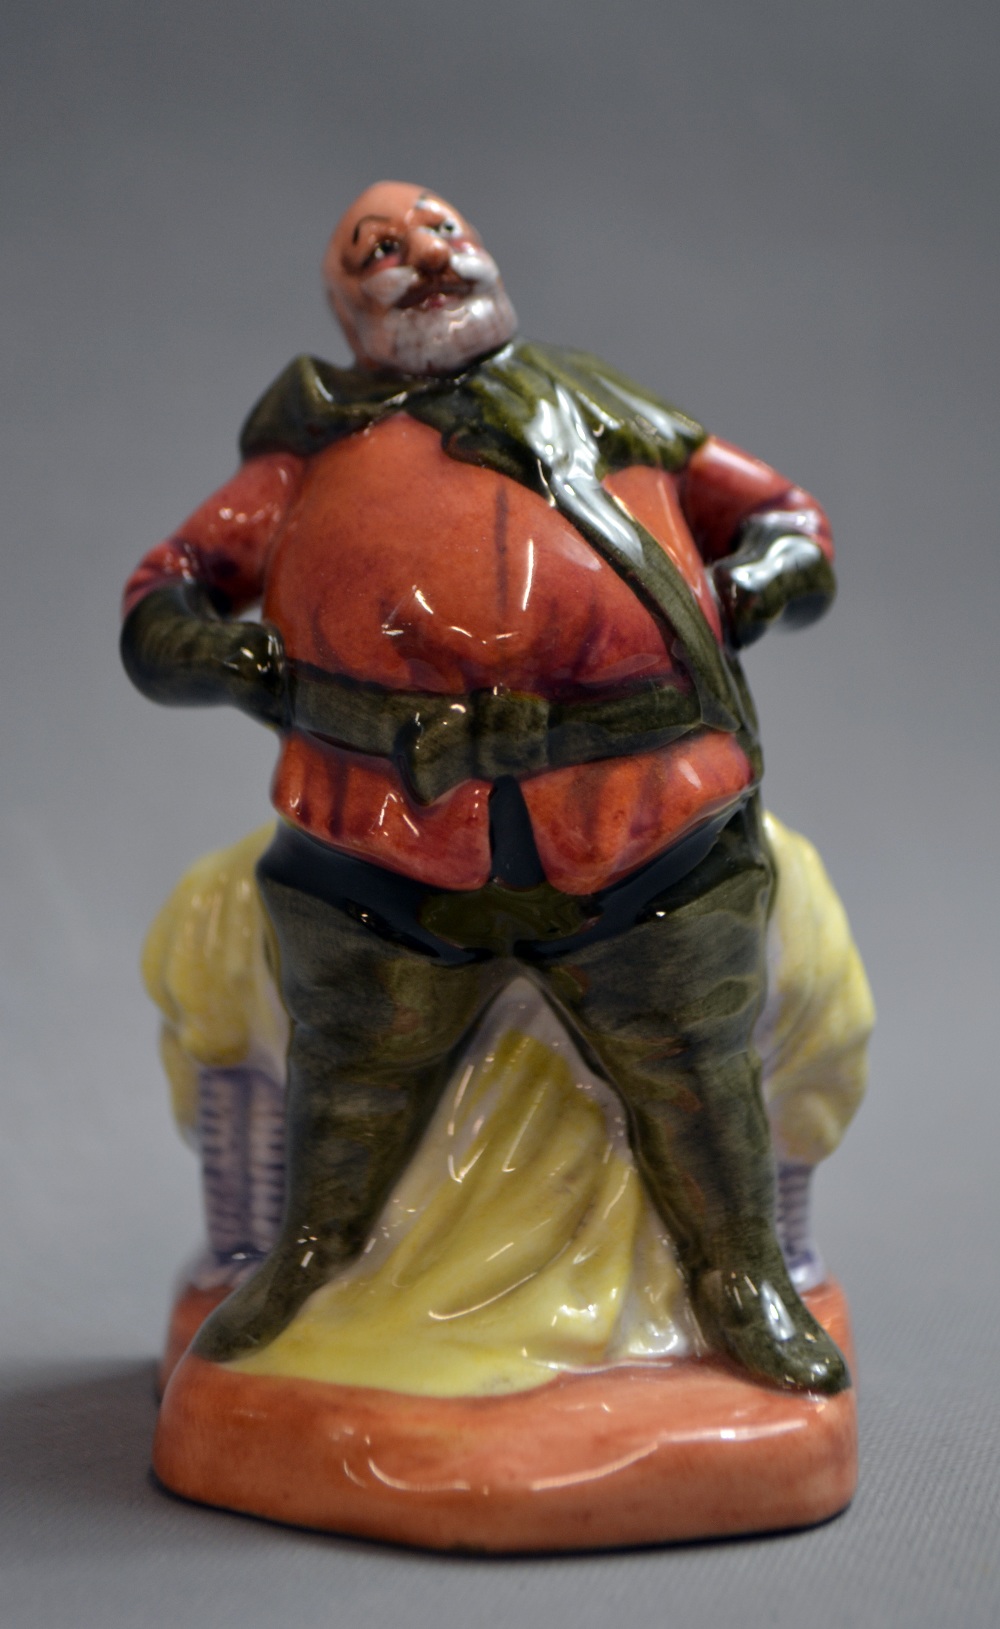 Royal Doulton, a glazed ceramic figure "